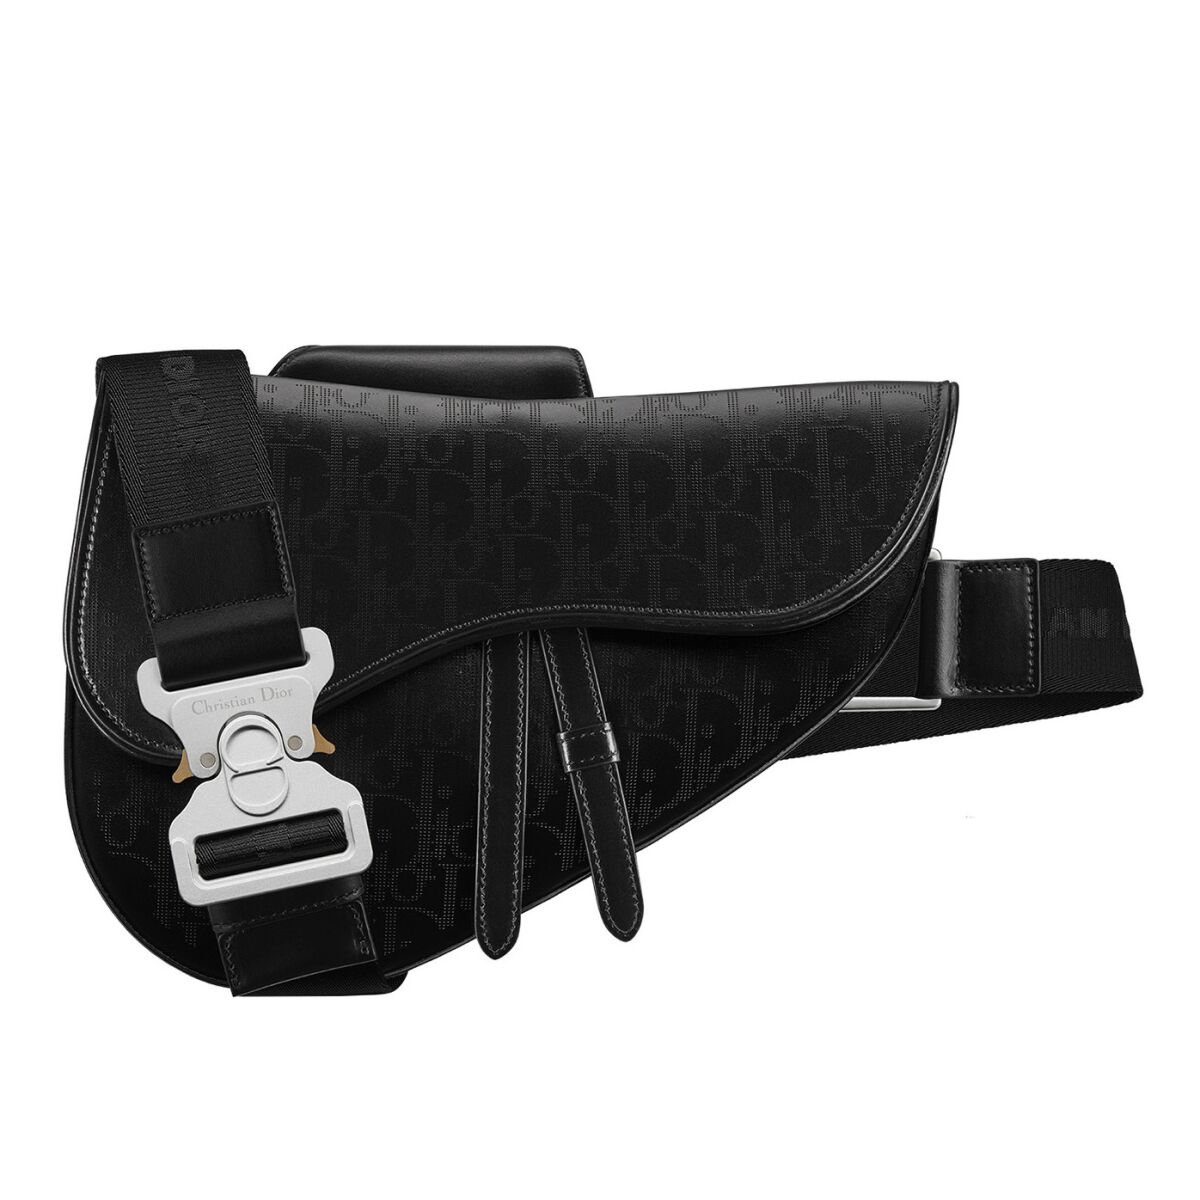 Dior Men's Saddle Bag in black Oblique Galaxy leather.